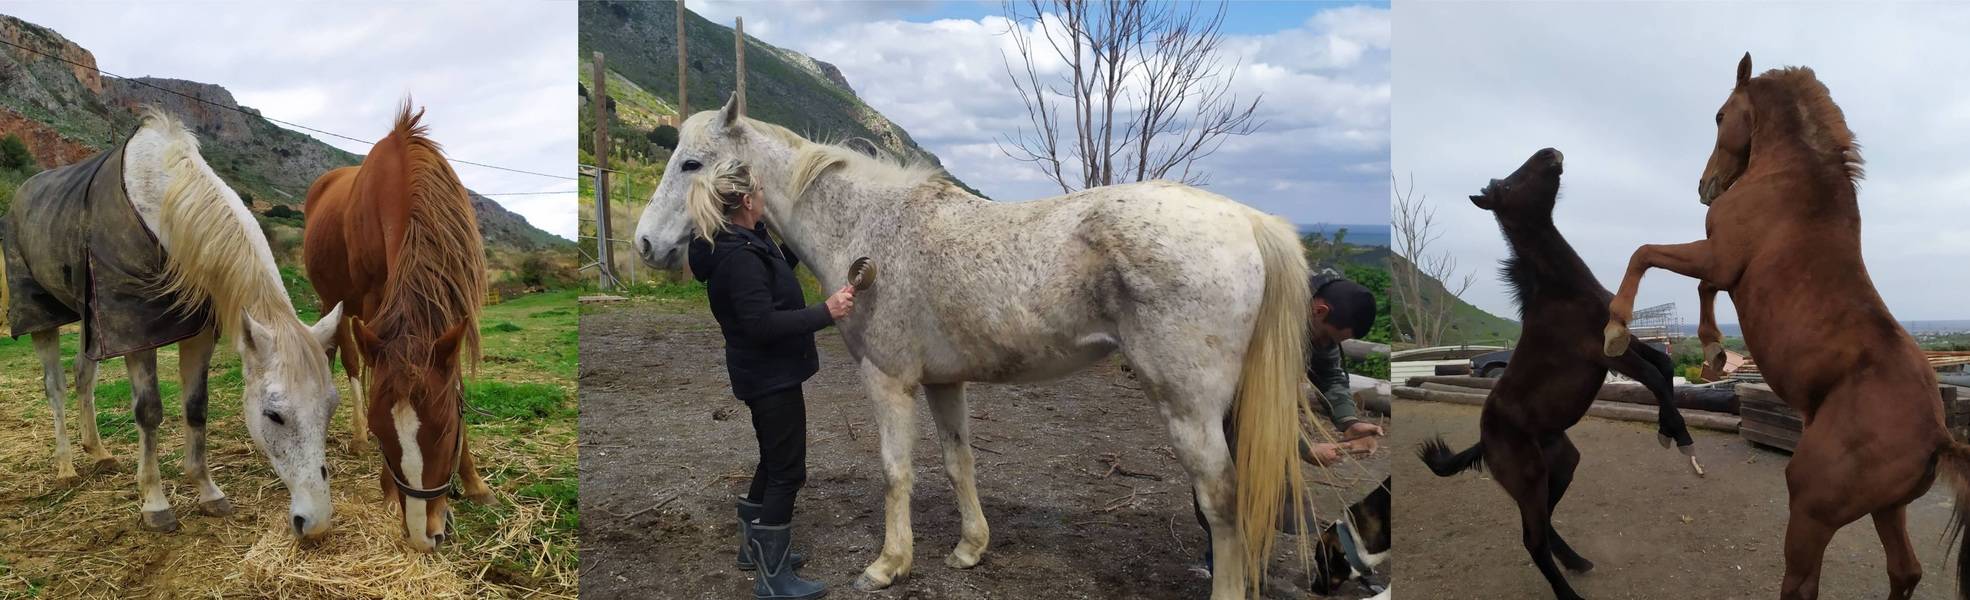 Pferdewohl-Projekt auf Kreta